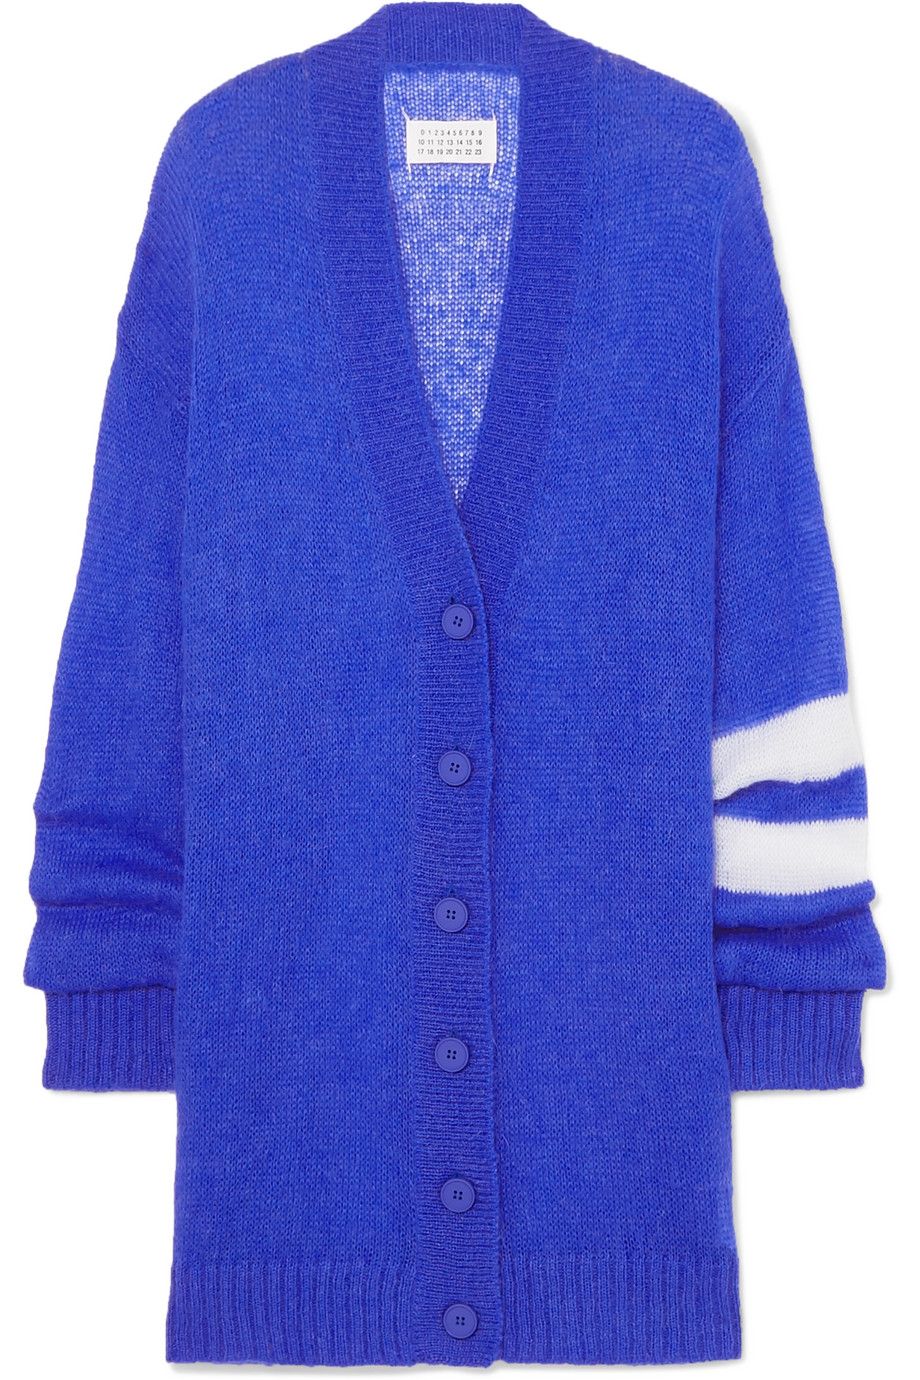 Clothing, Cobalt blue, Outerwear, Blue, Woolen, Sleeve, Electric blue, Cardigan, Sweater, Wool, 